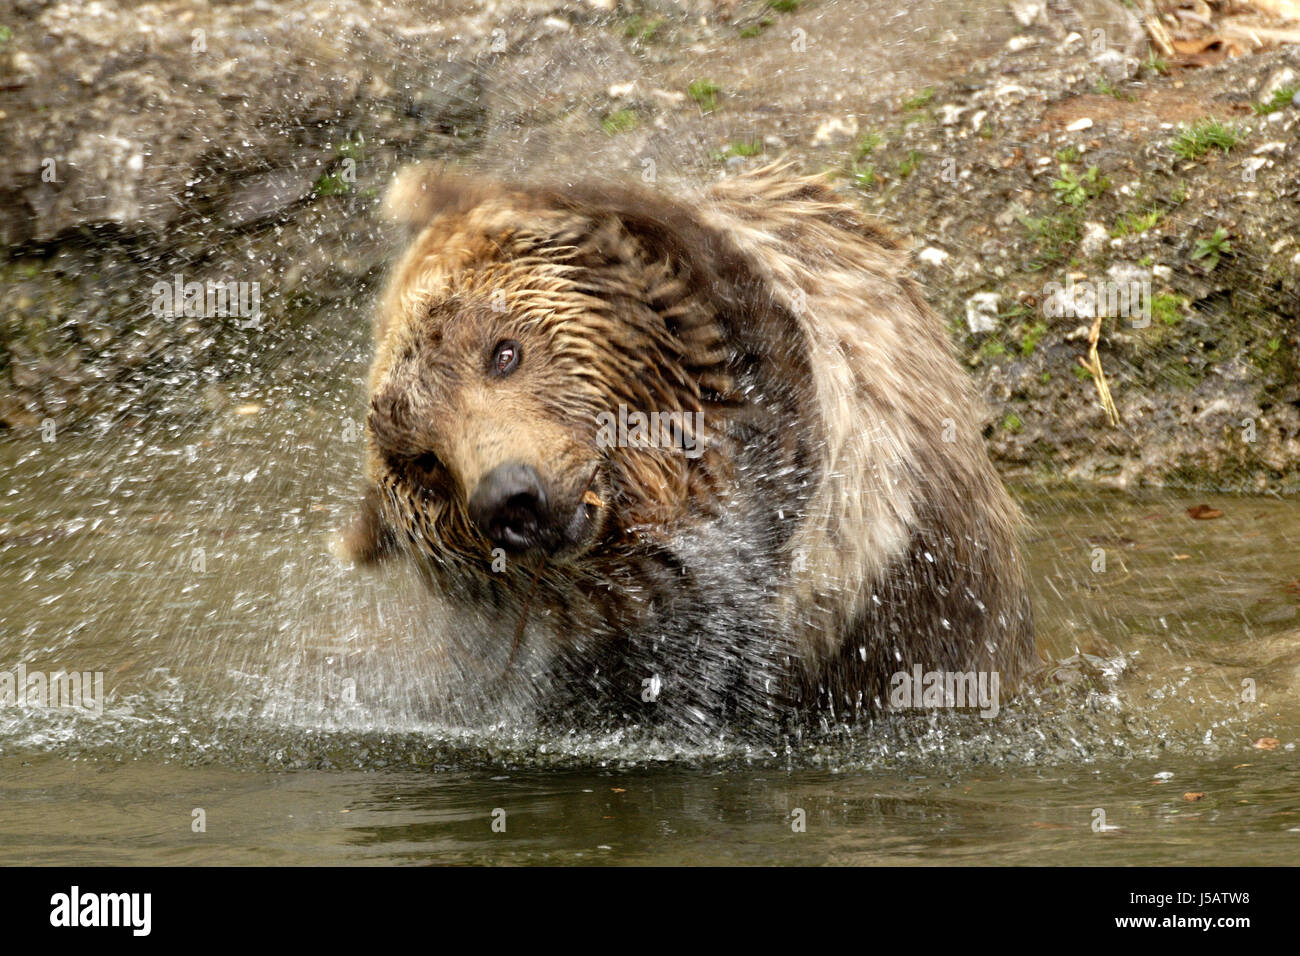 bear skin canada wash washing laundry shake water drop waterdrop water baer Stock Photo